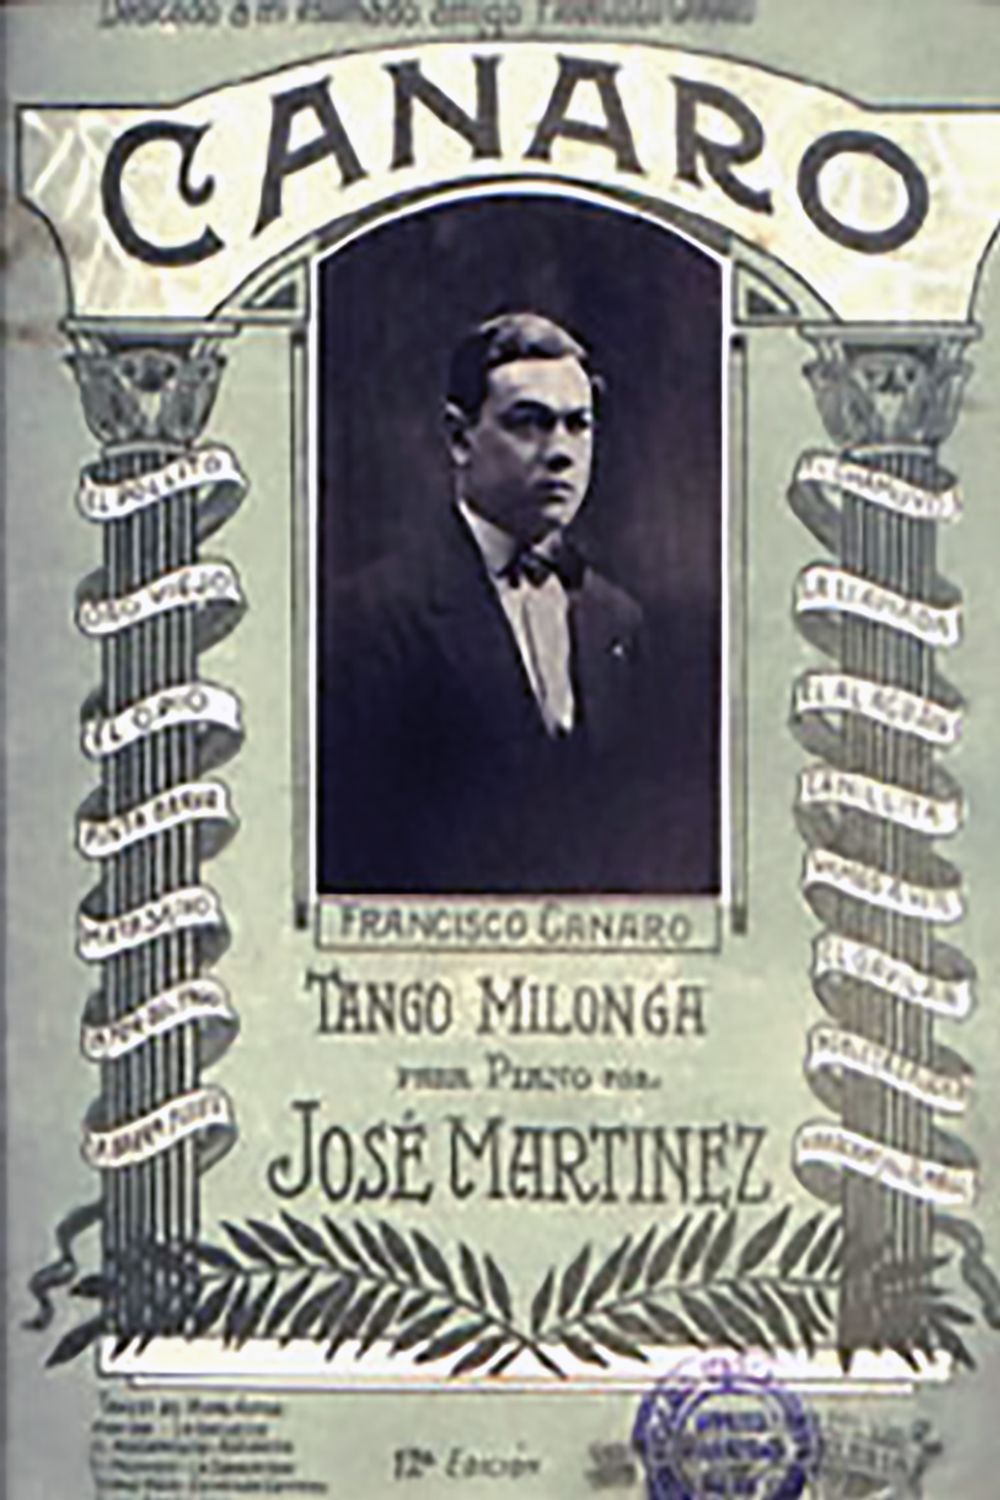 "Canaro", Argentine Tango music sheet cover.